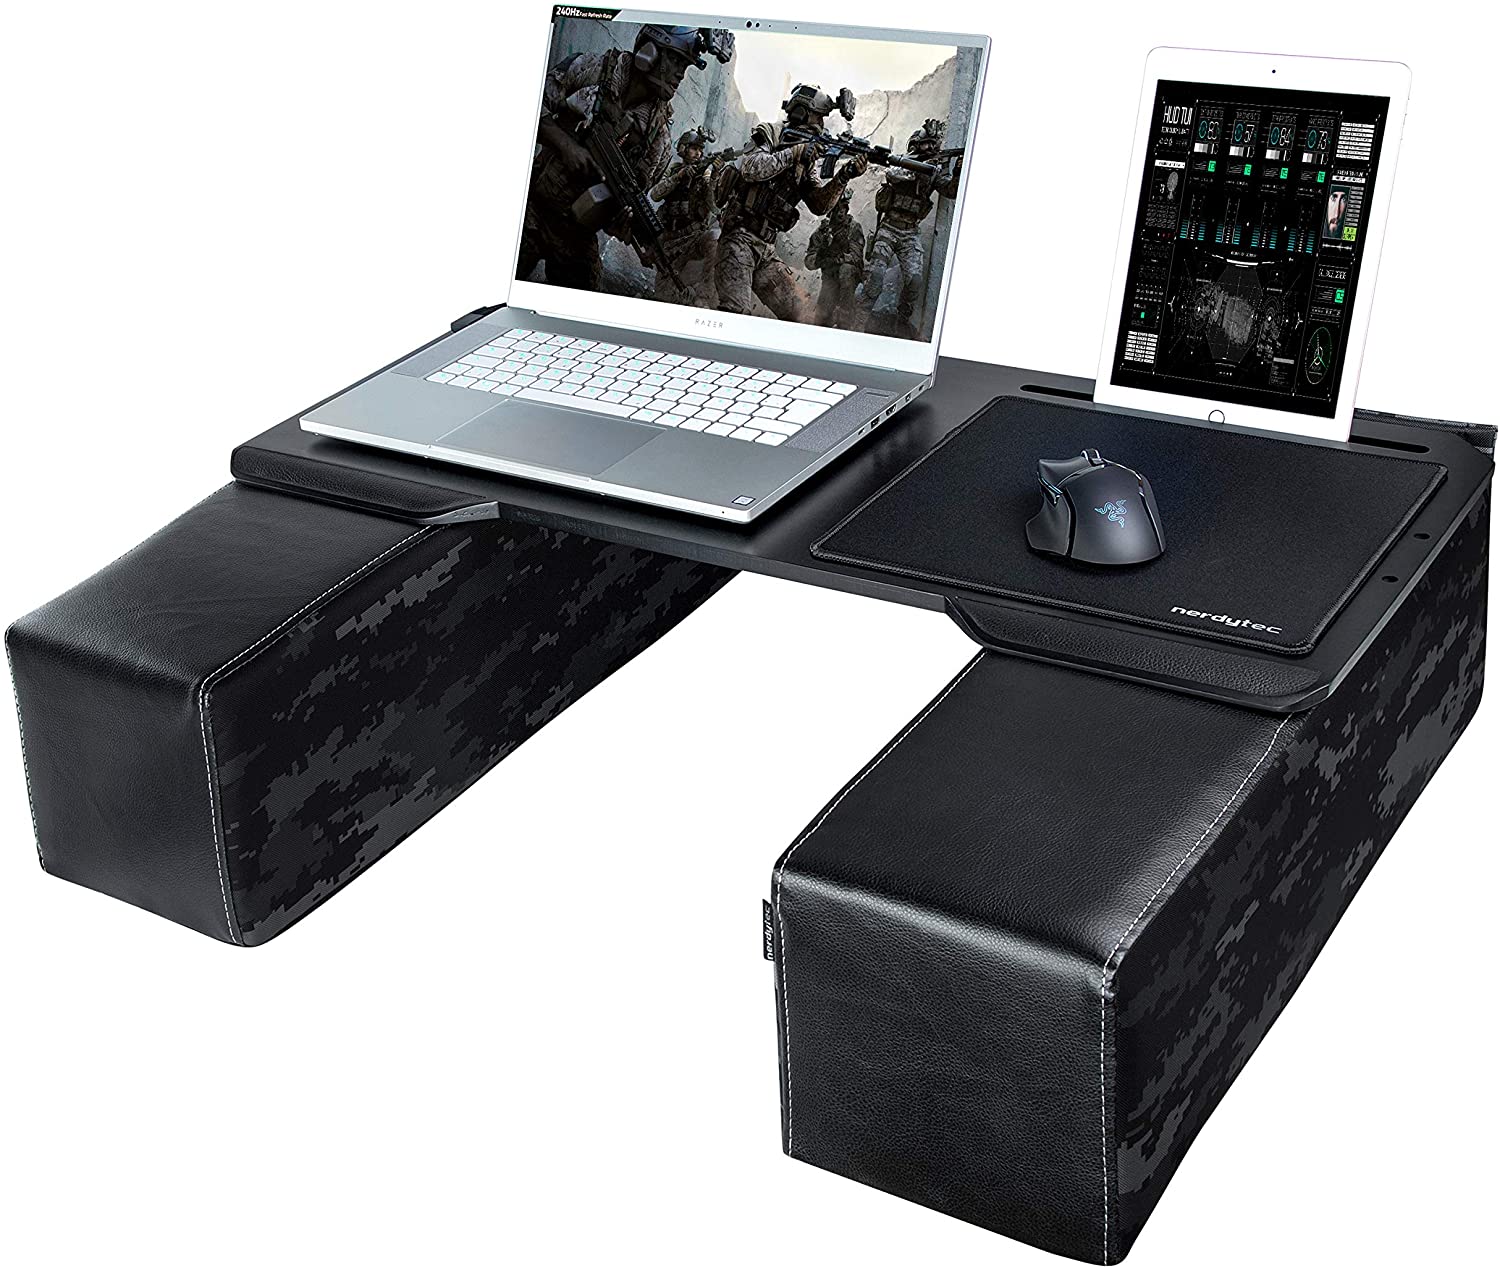 Couchmaster CYBOT – Ergonomic Lap Desk